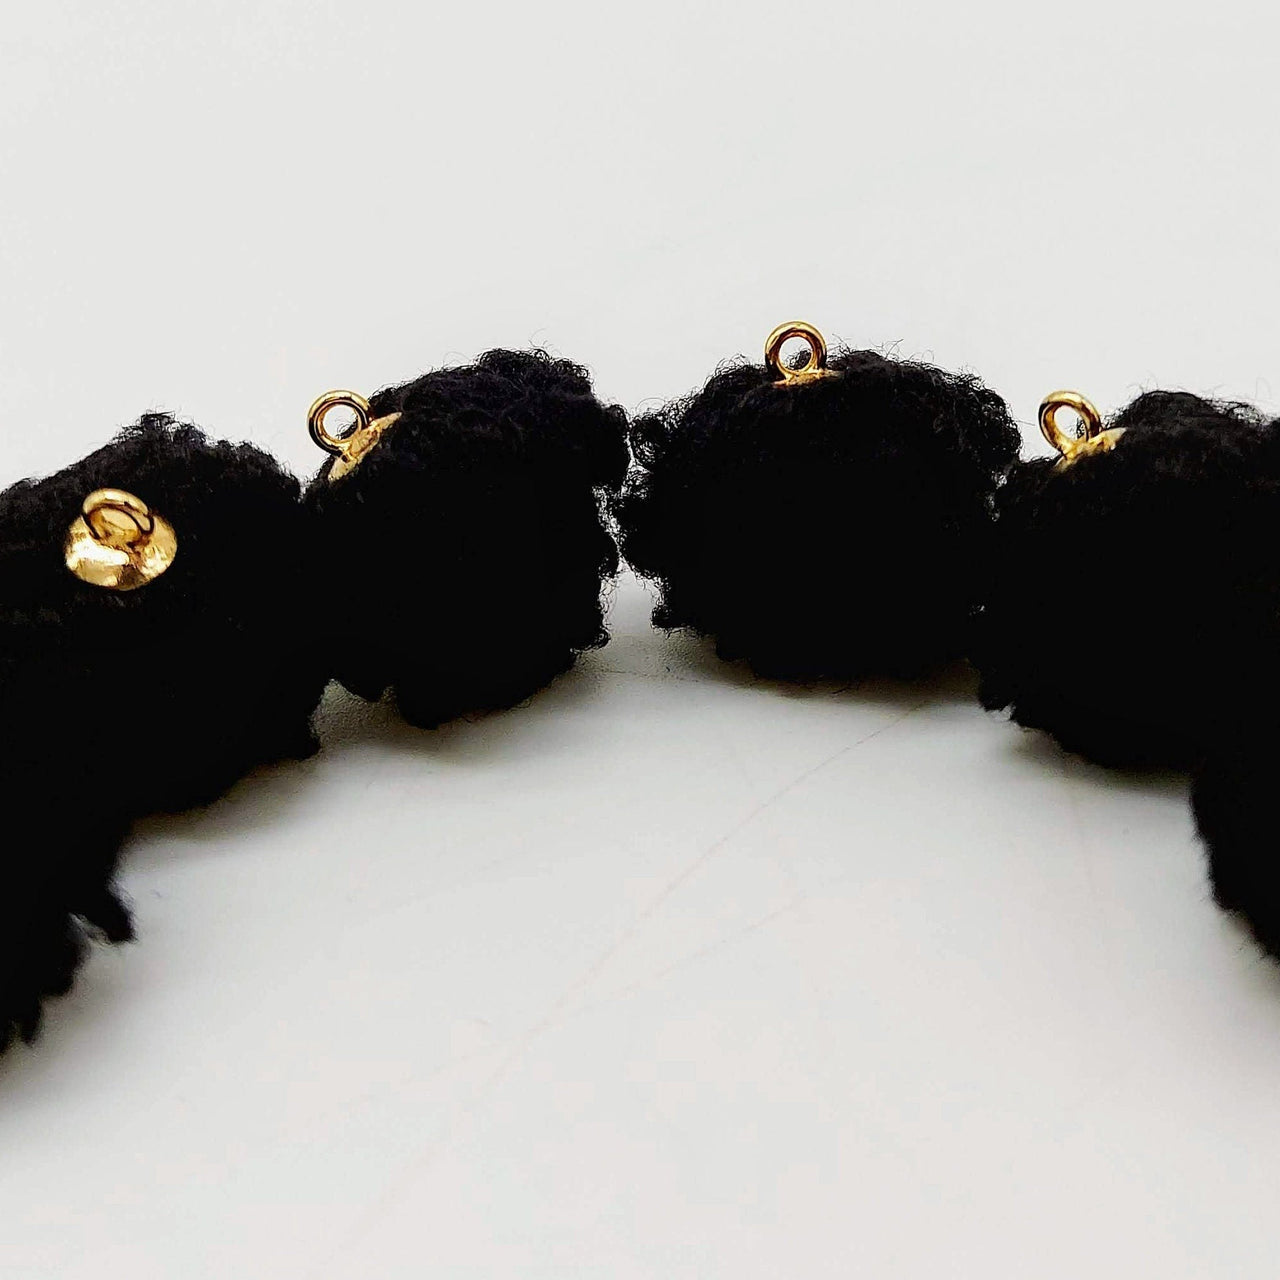 Black Fur Fabric Ball Tassel, Button with Ring Cap, Decorative Tassels